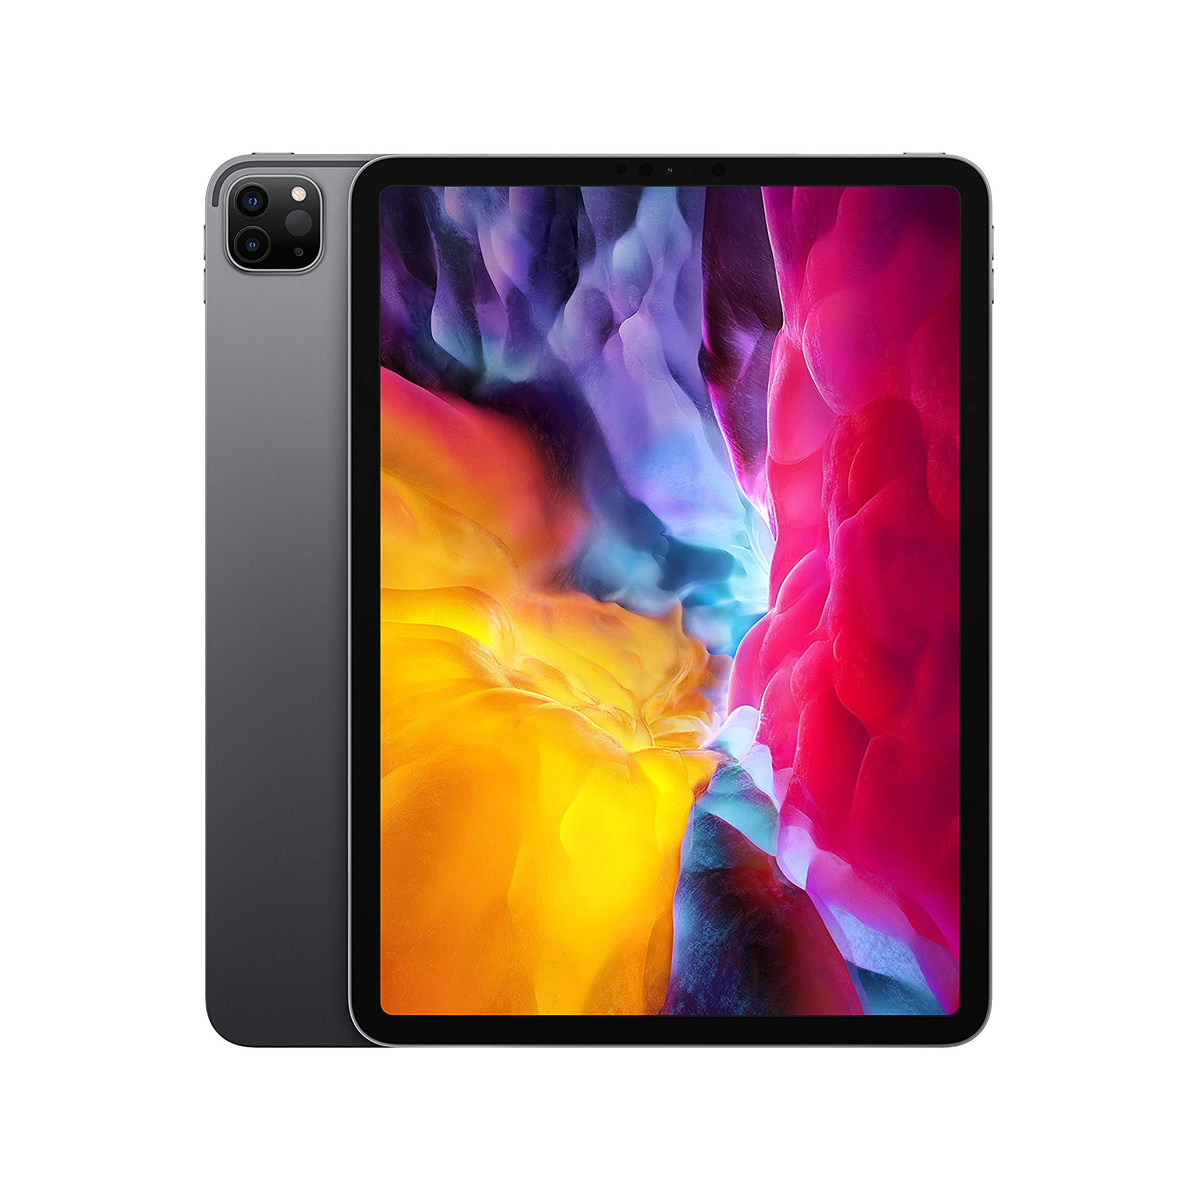 Apple iPad Pro (11-inch, Wi-Fi, 256GB) - Space Gray (2nd Generation)